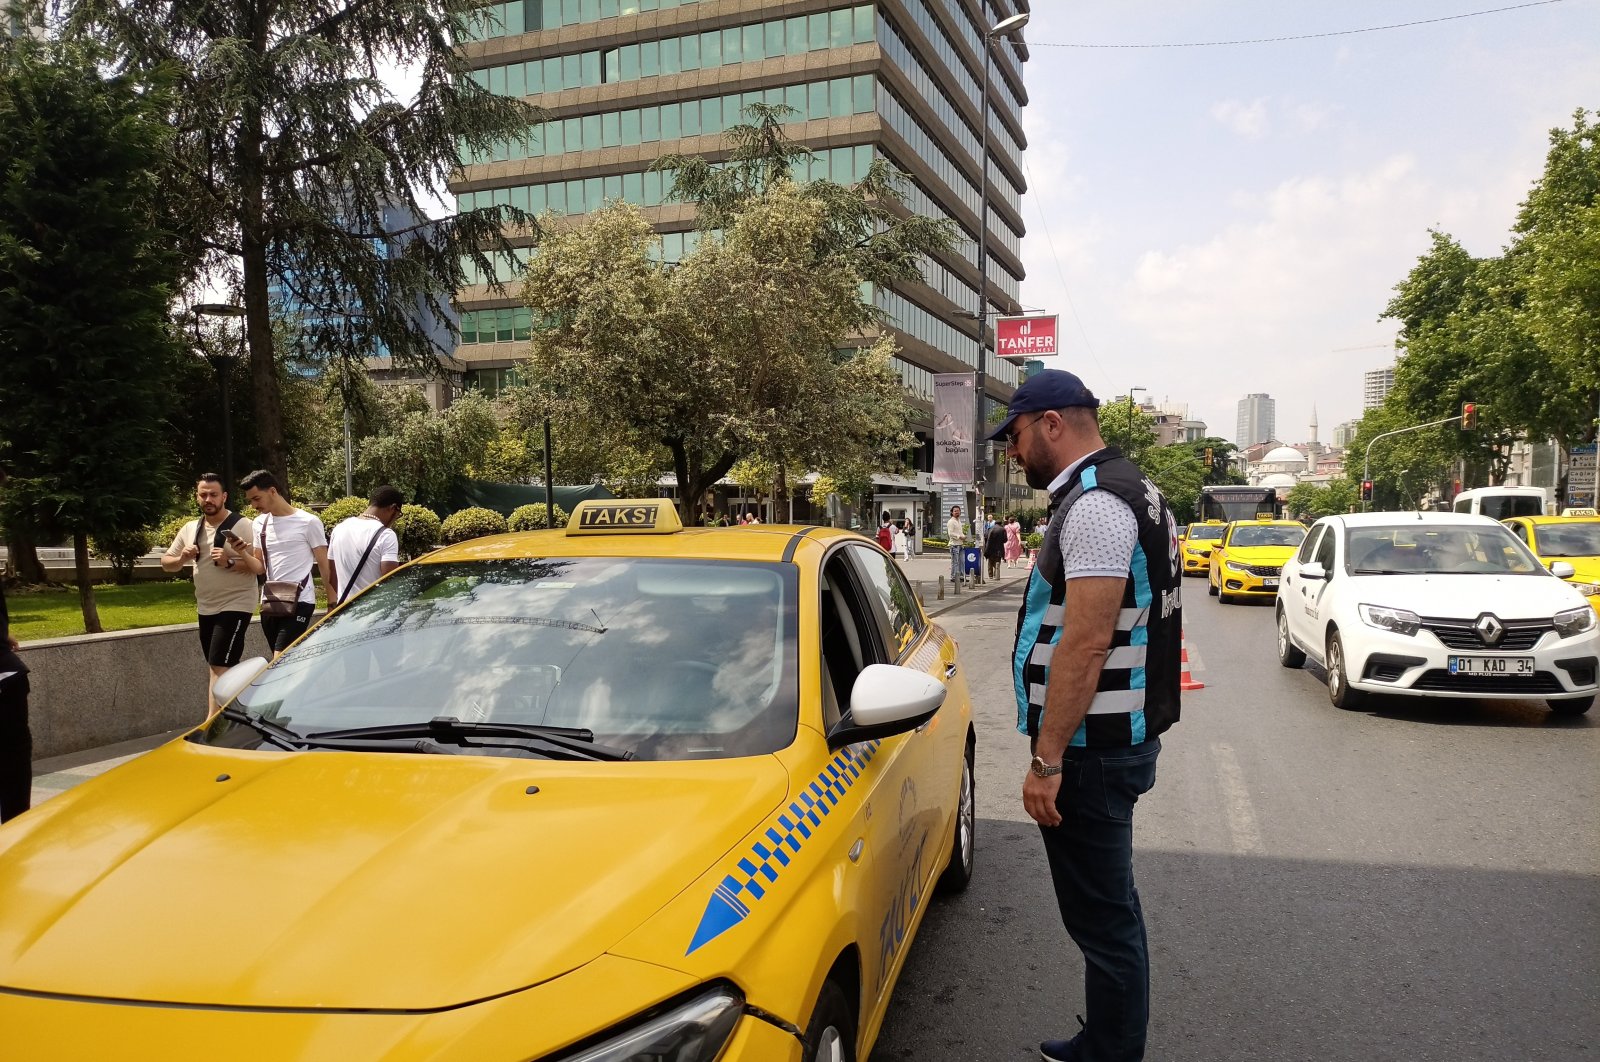 Police officers inspect taxis in the Şişli district of Istanbul, Turkey, June 3, 2022. (İHA PHOTO)